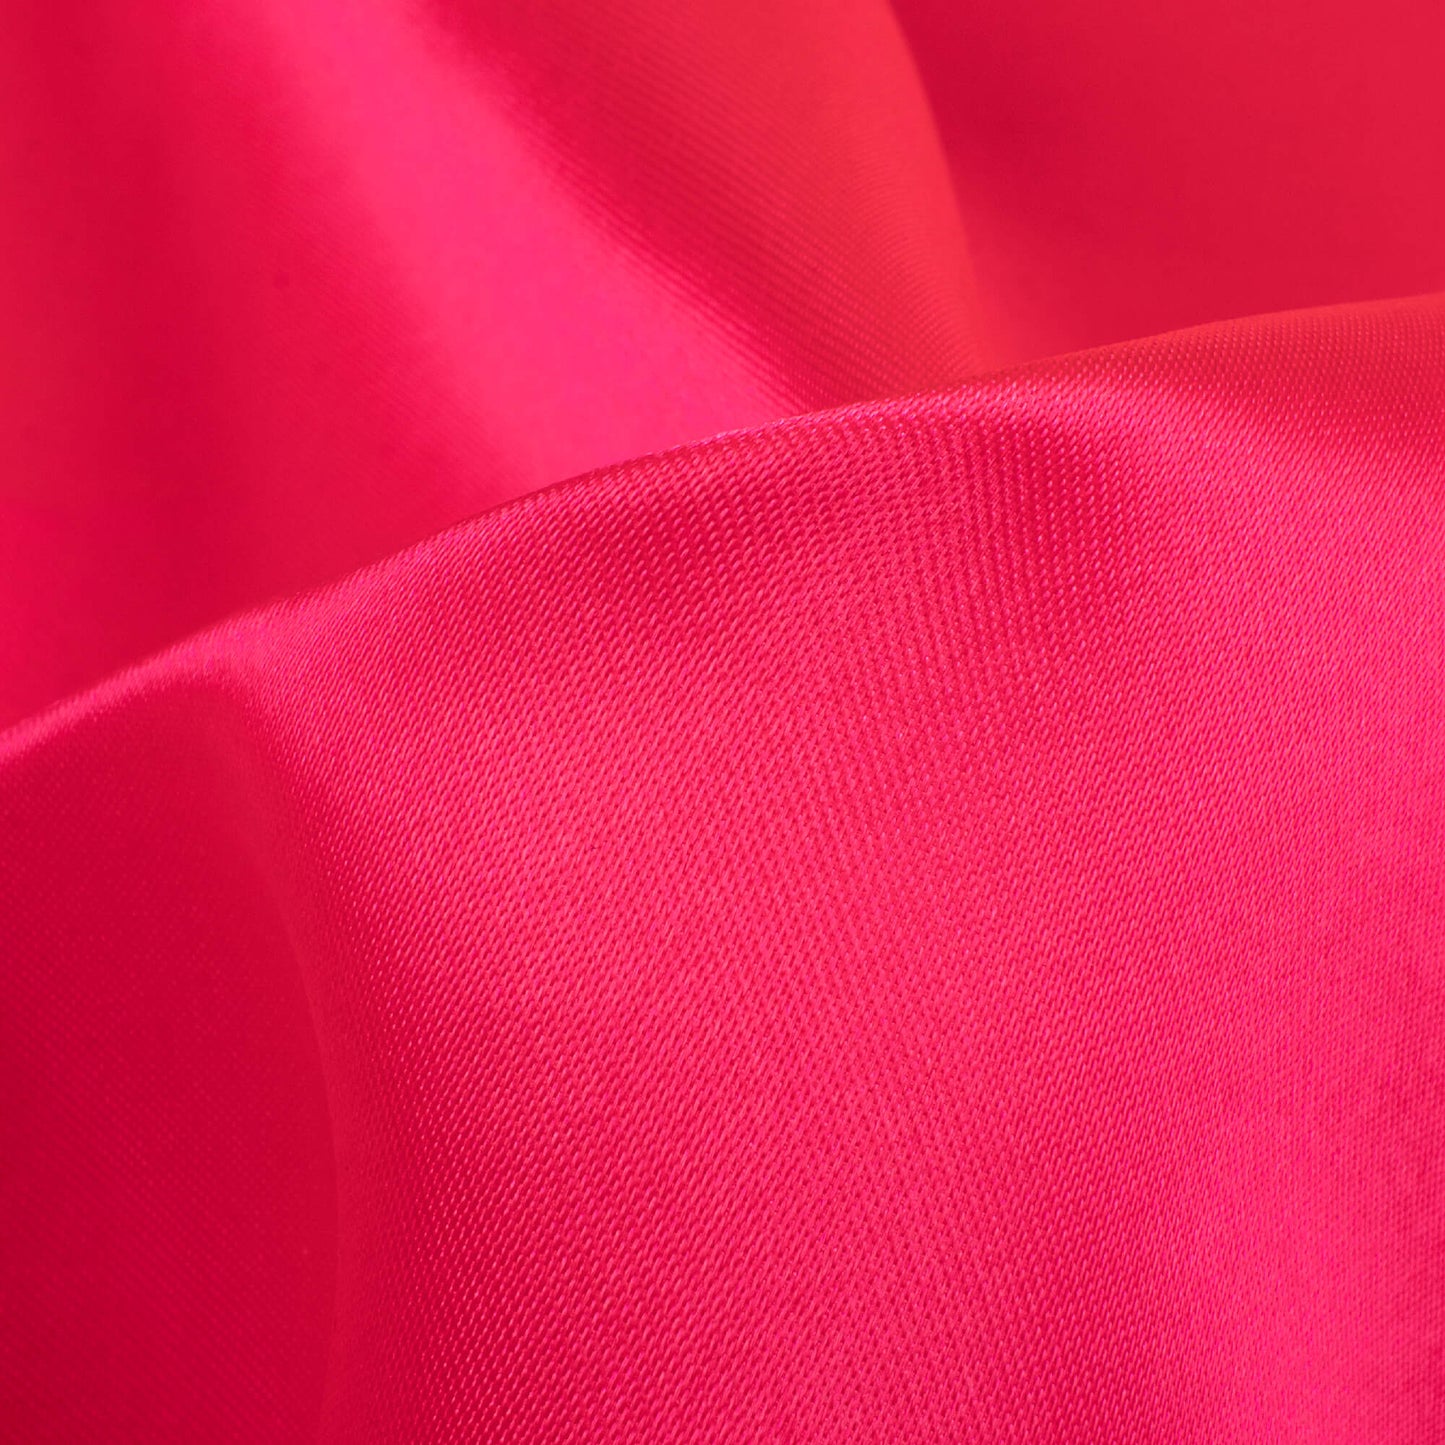 Flourescent Pink Plain Neon Ultra Satin Fabric